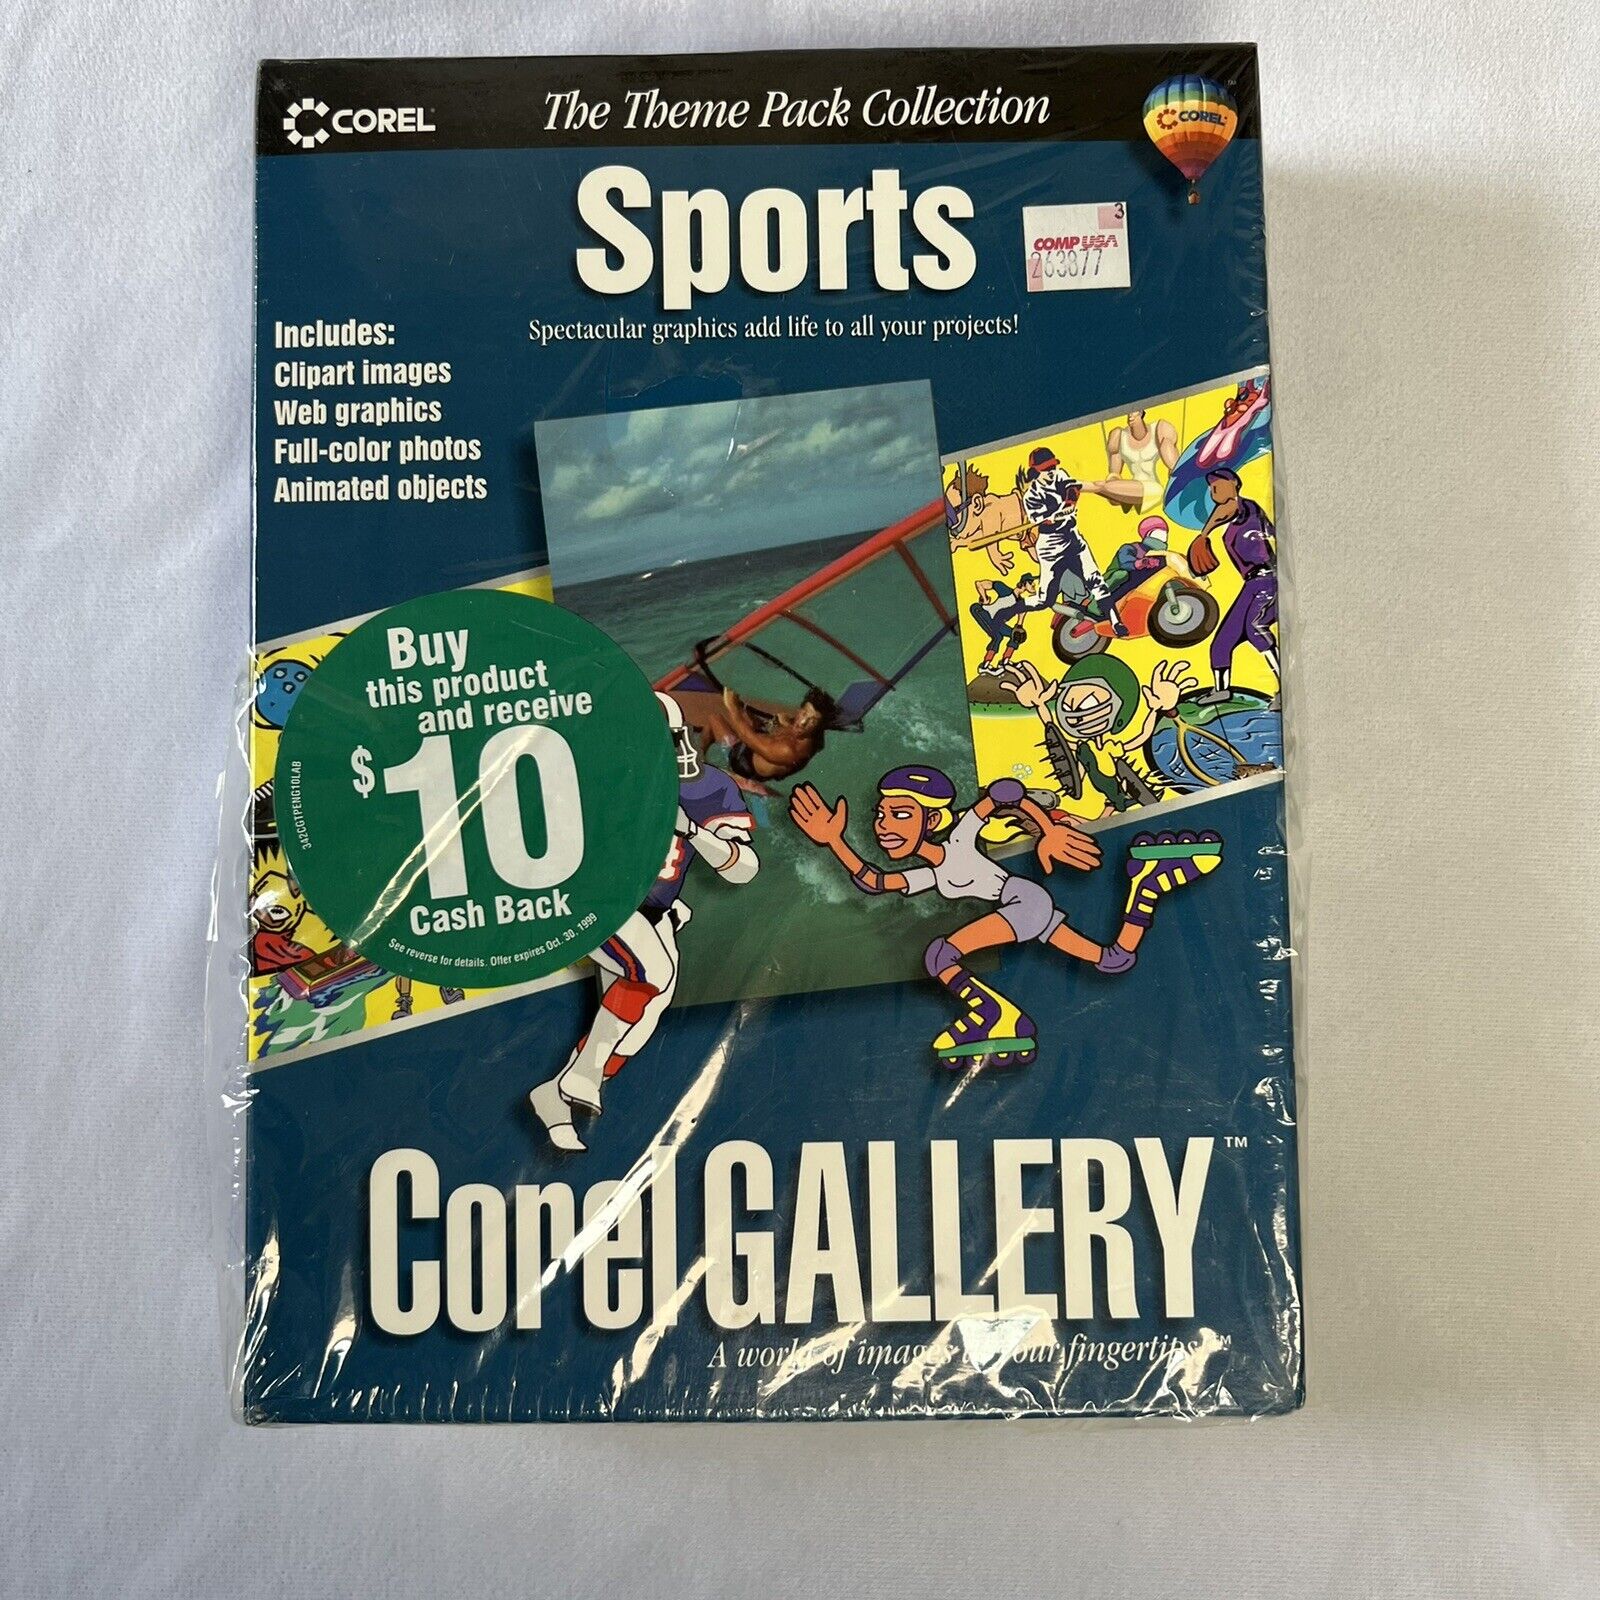 Corel Gallery Sports_Theme Based Clip Art_Brand New